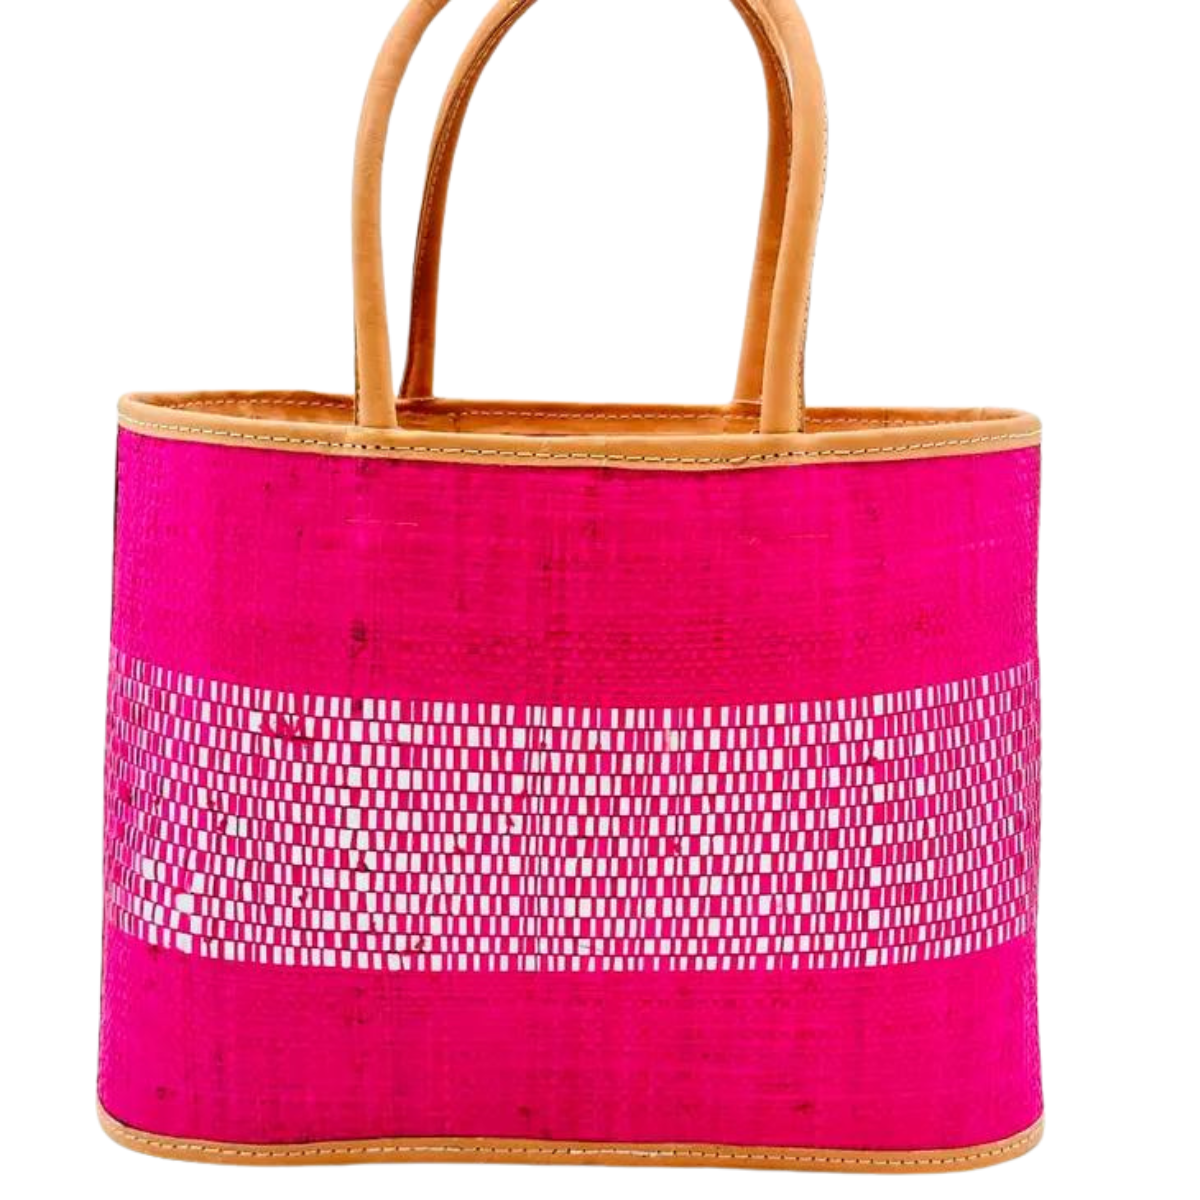 Wynwood Straw Basket Bag Handbag with Metallic Detailing - (fuchsia or natural)